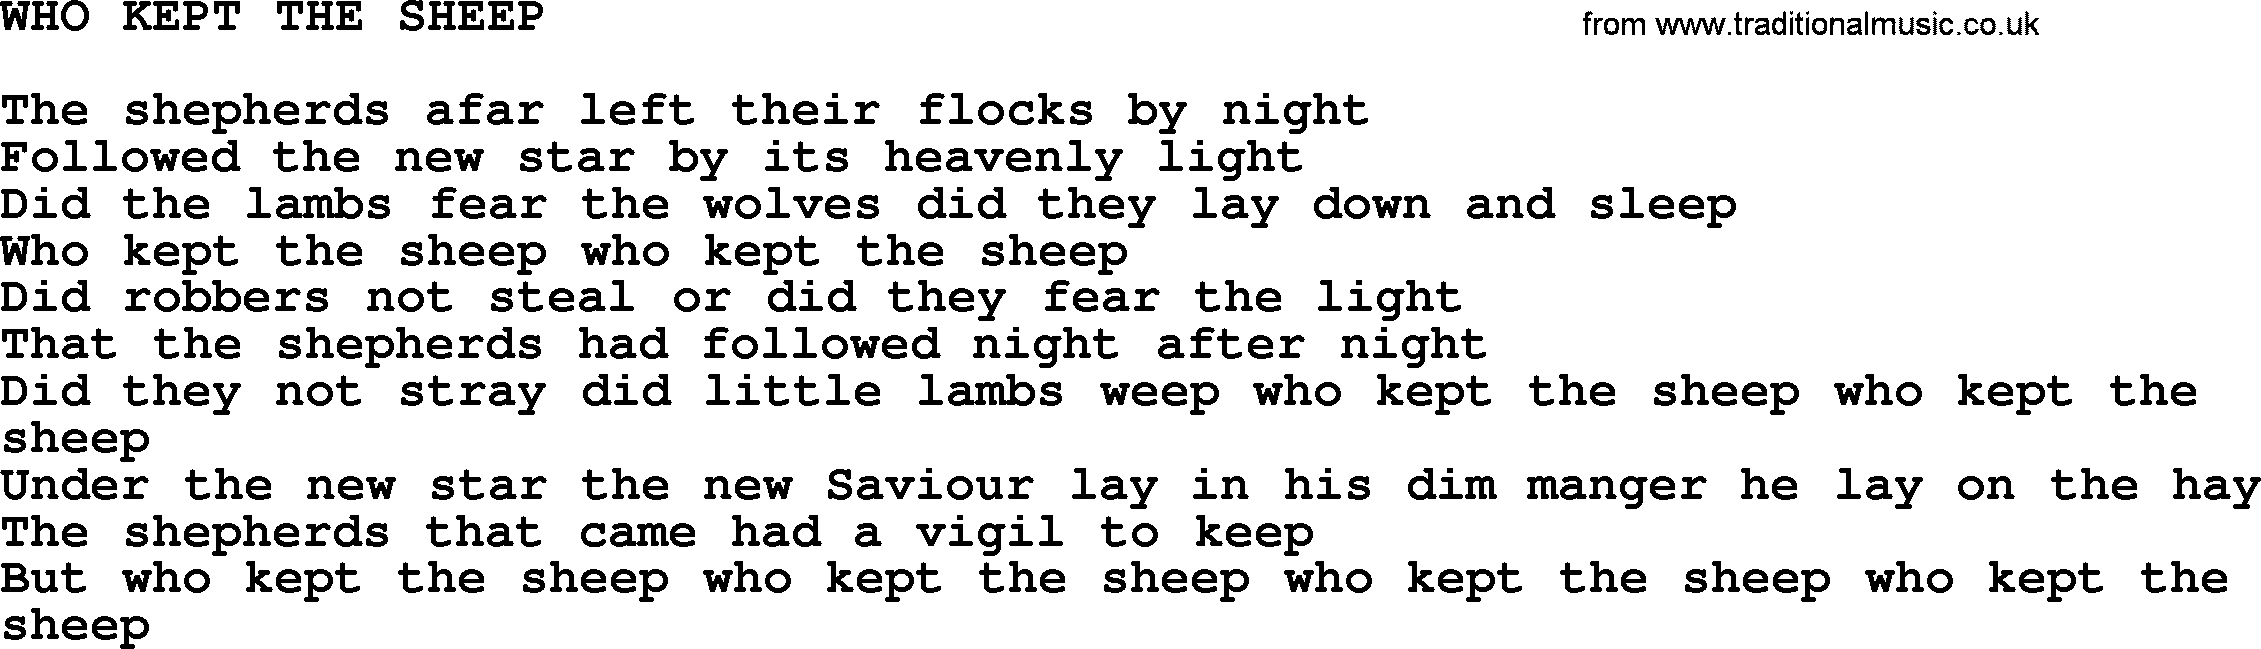 Johnny Cash song Who Kept The Sheep.txt lyrics